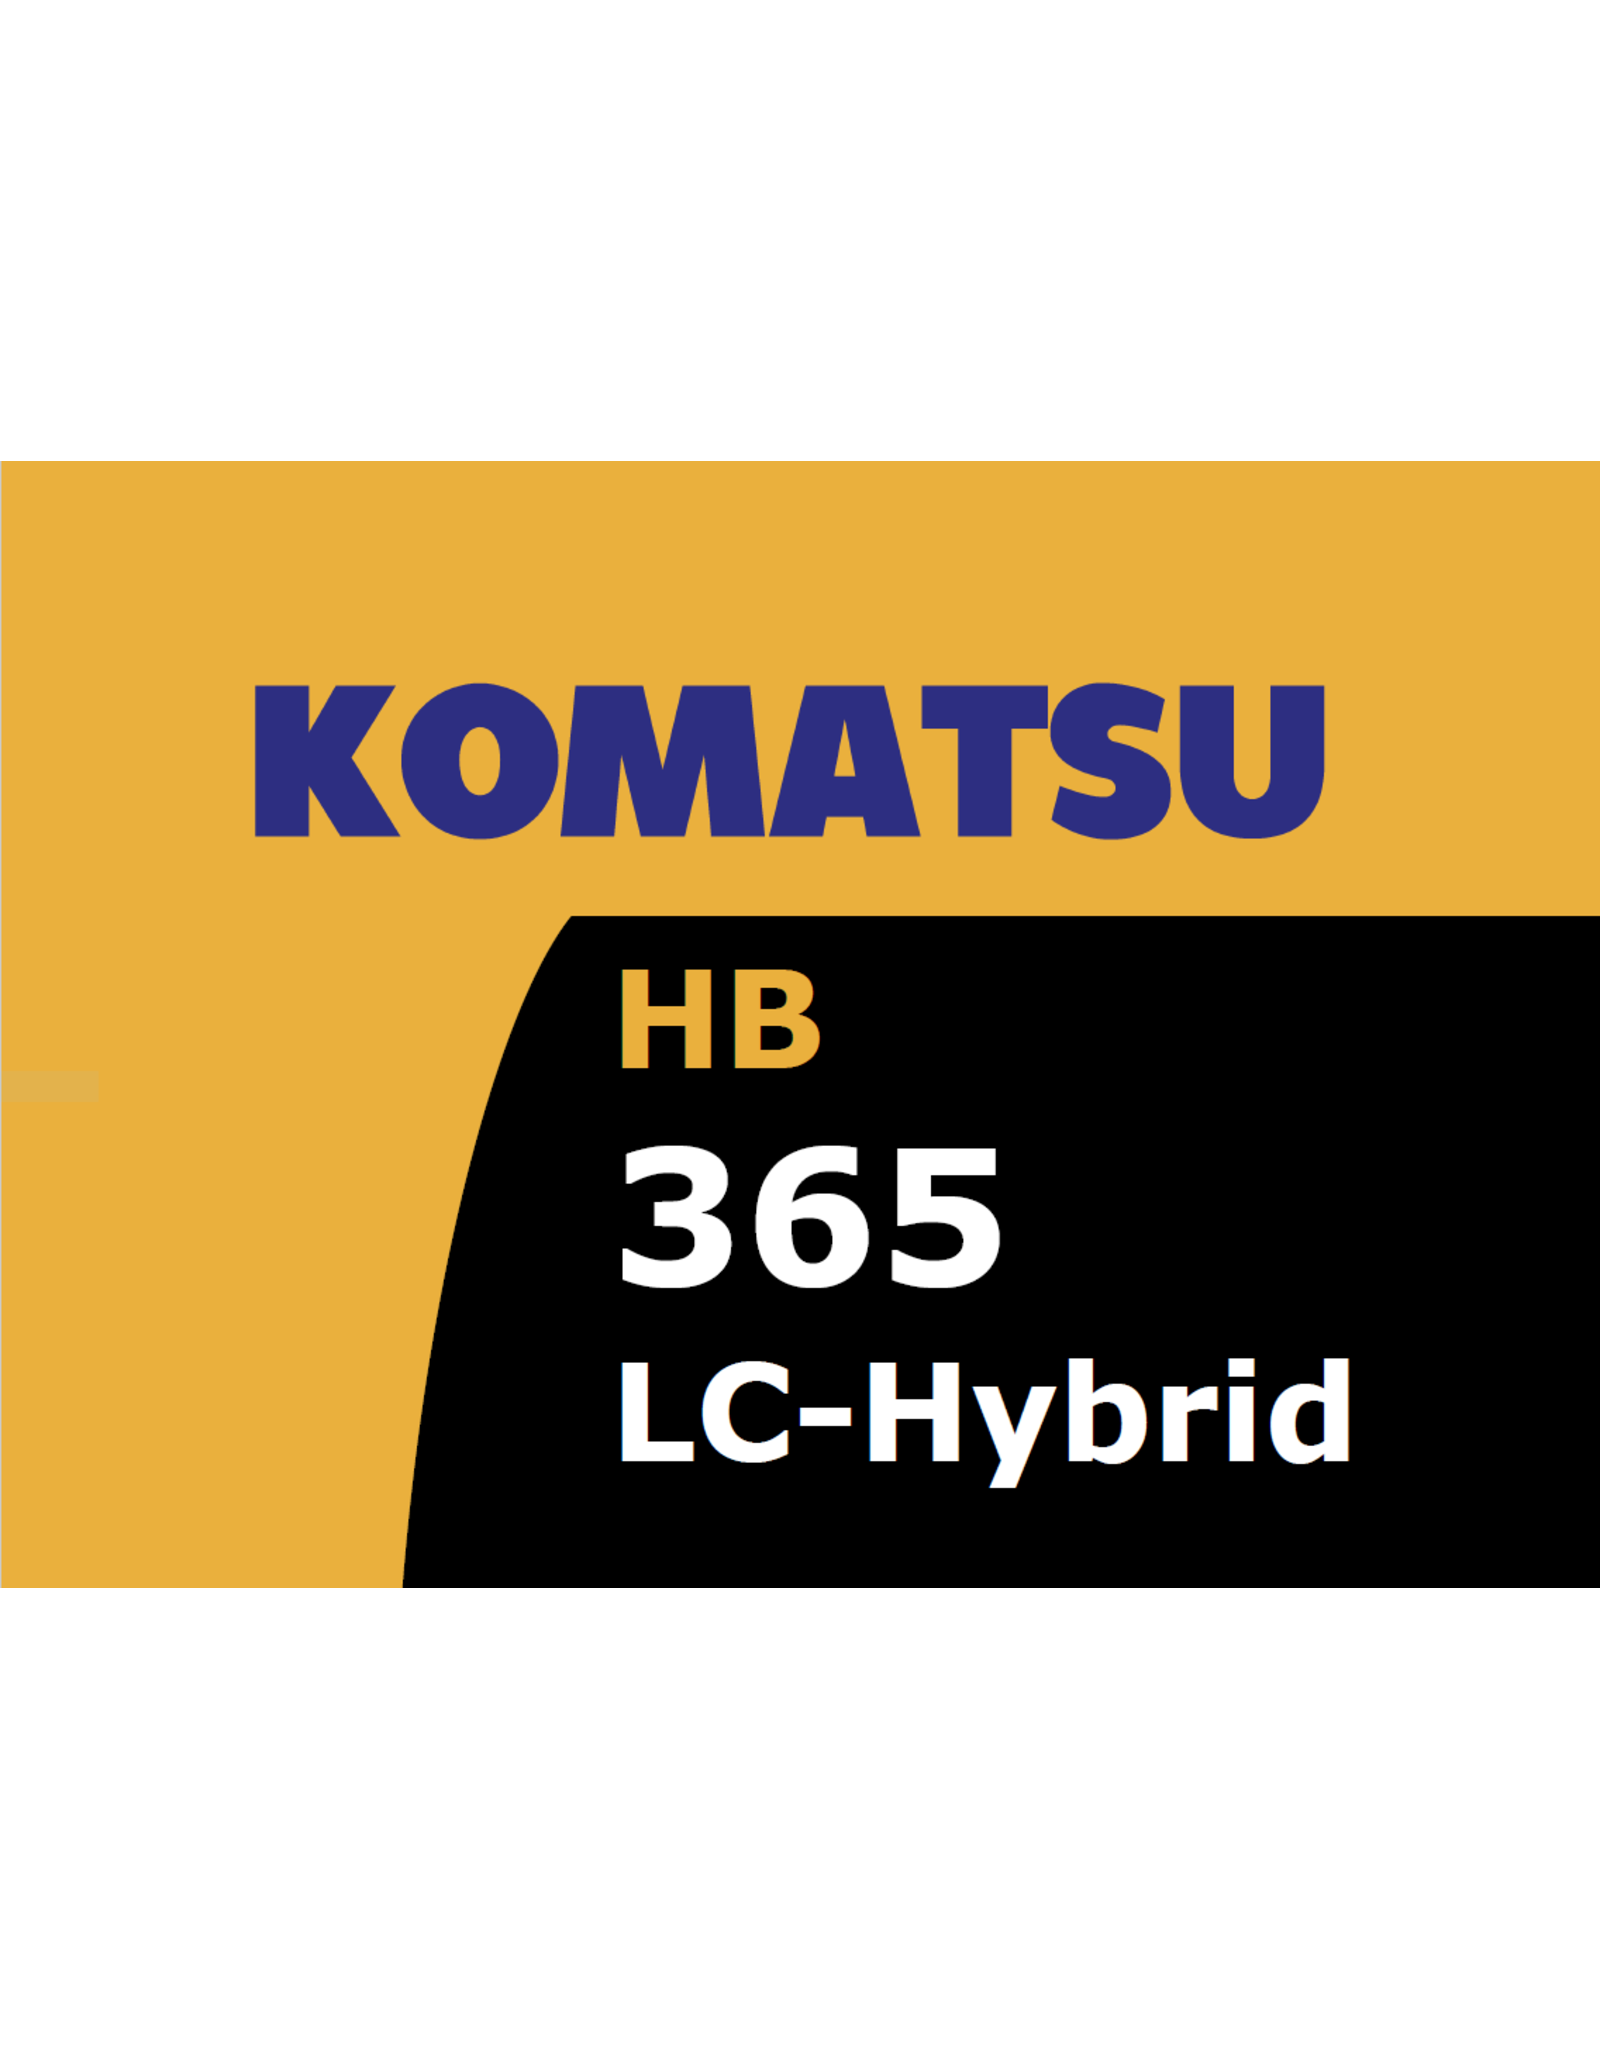 Echle Hartstahl GmbH Bucket cylinder guards for Komatsu HB365NLC